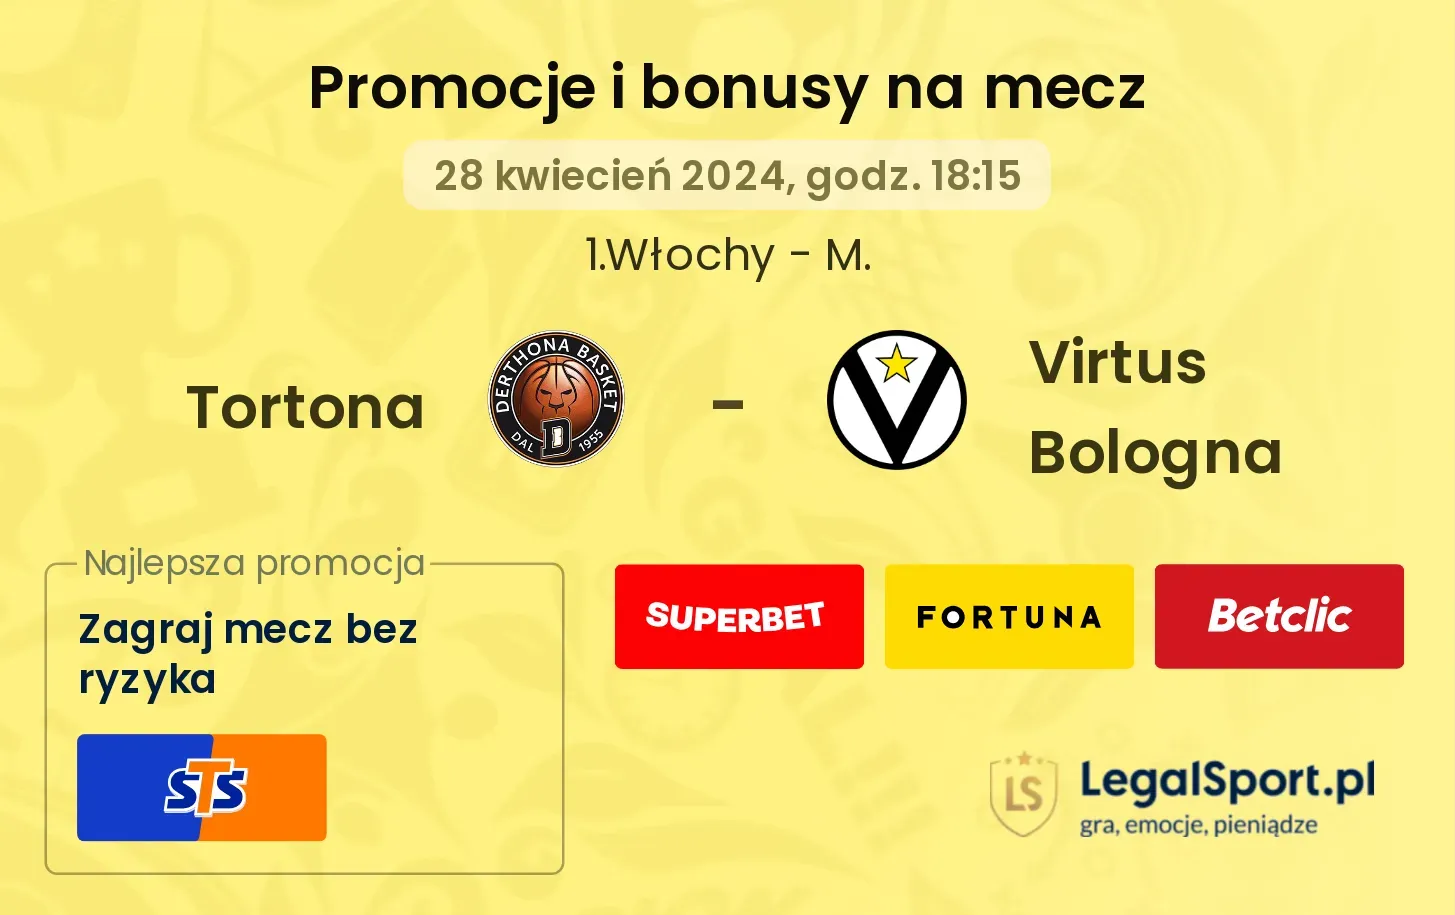 Tortona - Virtus Bologna promocje bonusy na mecz